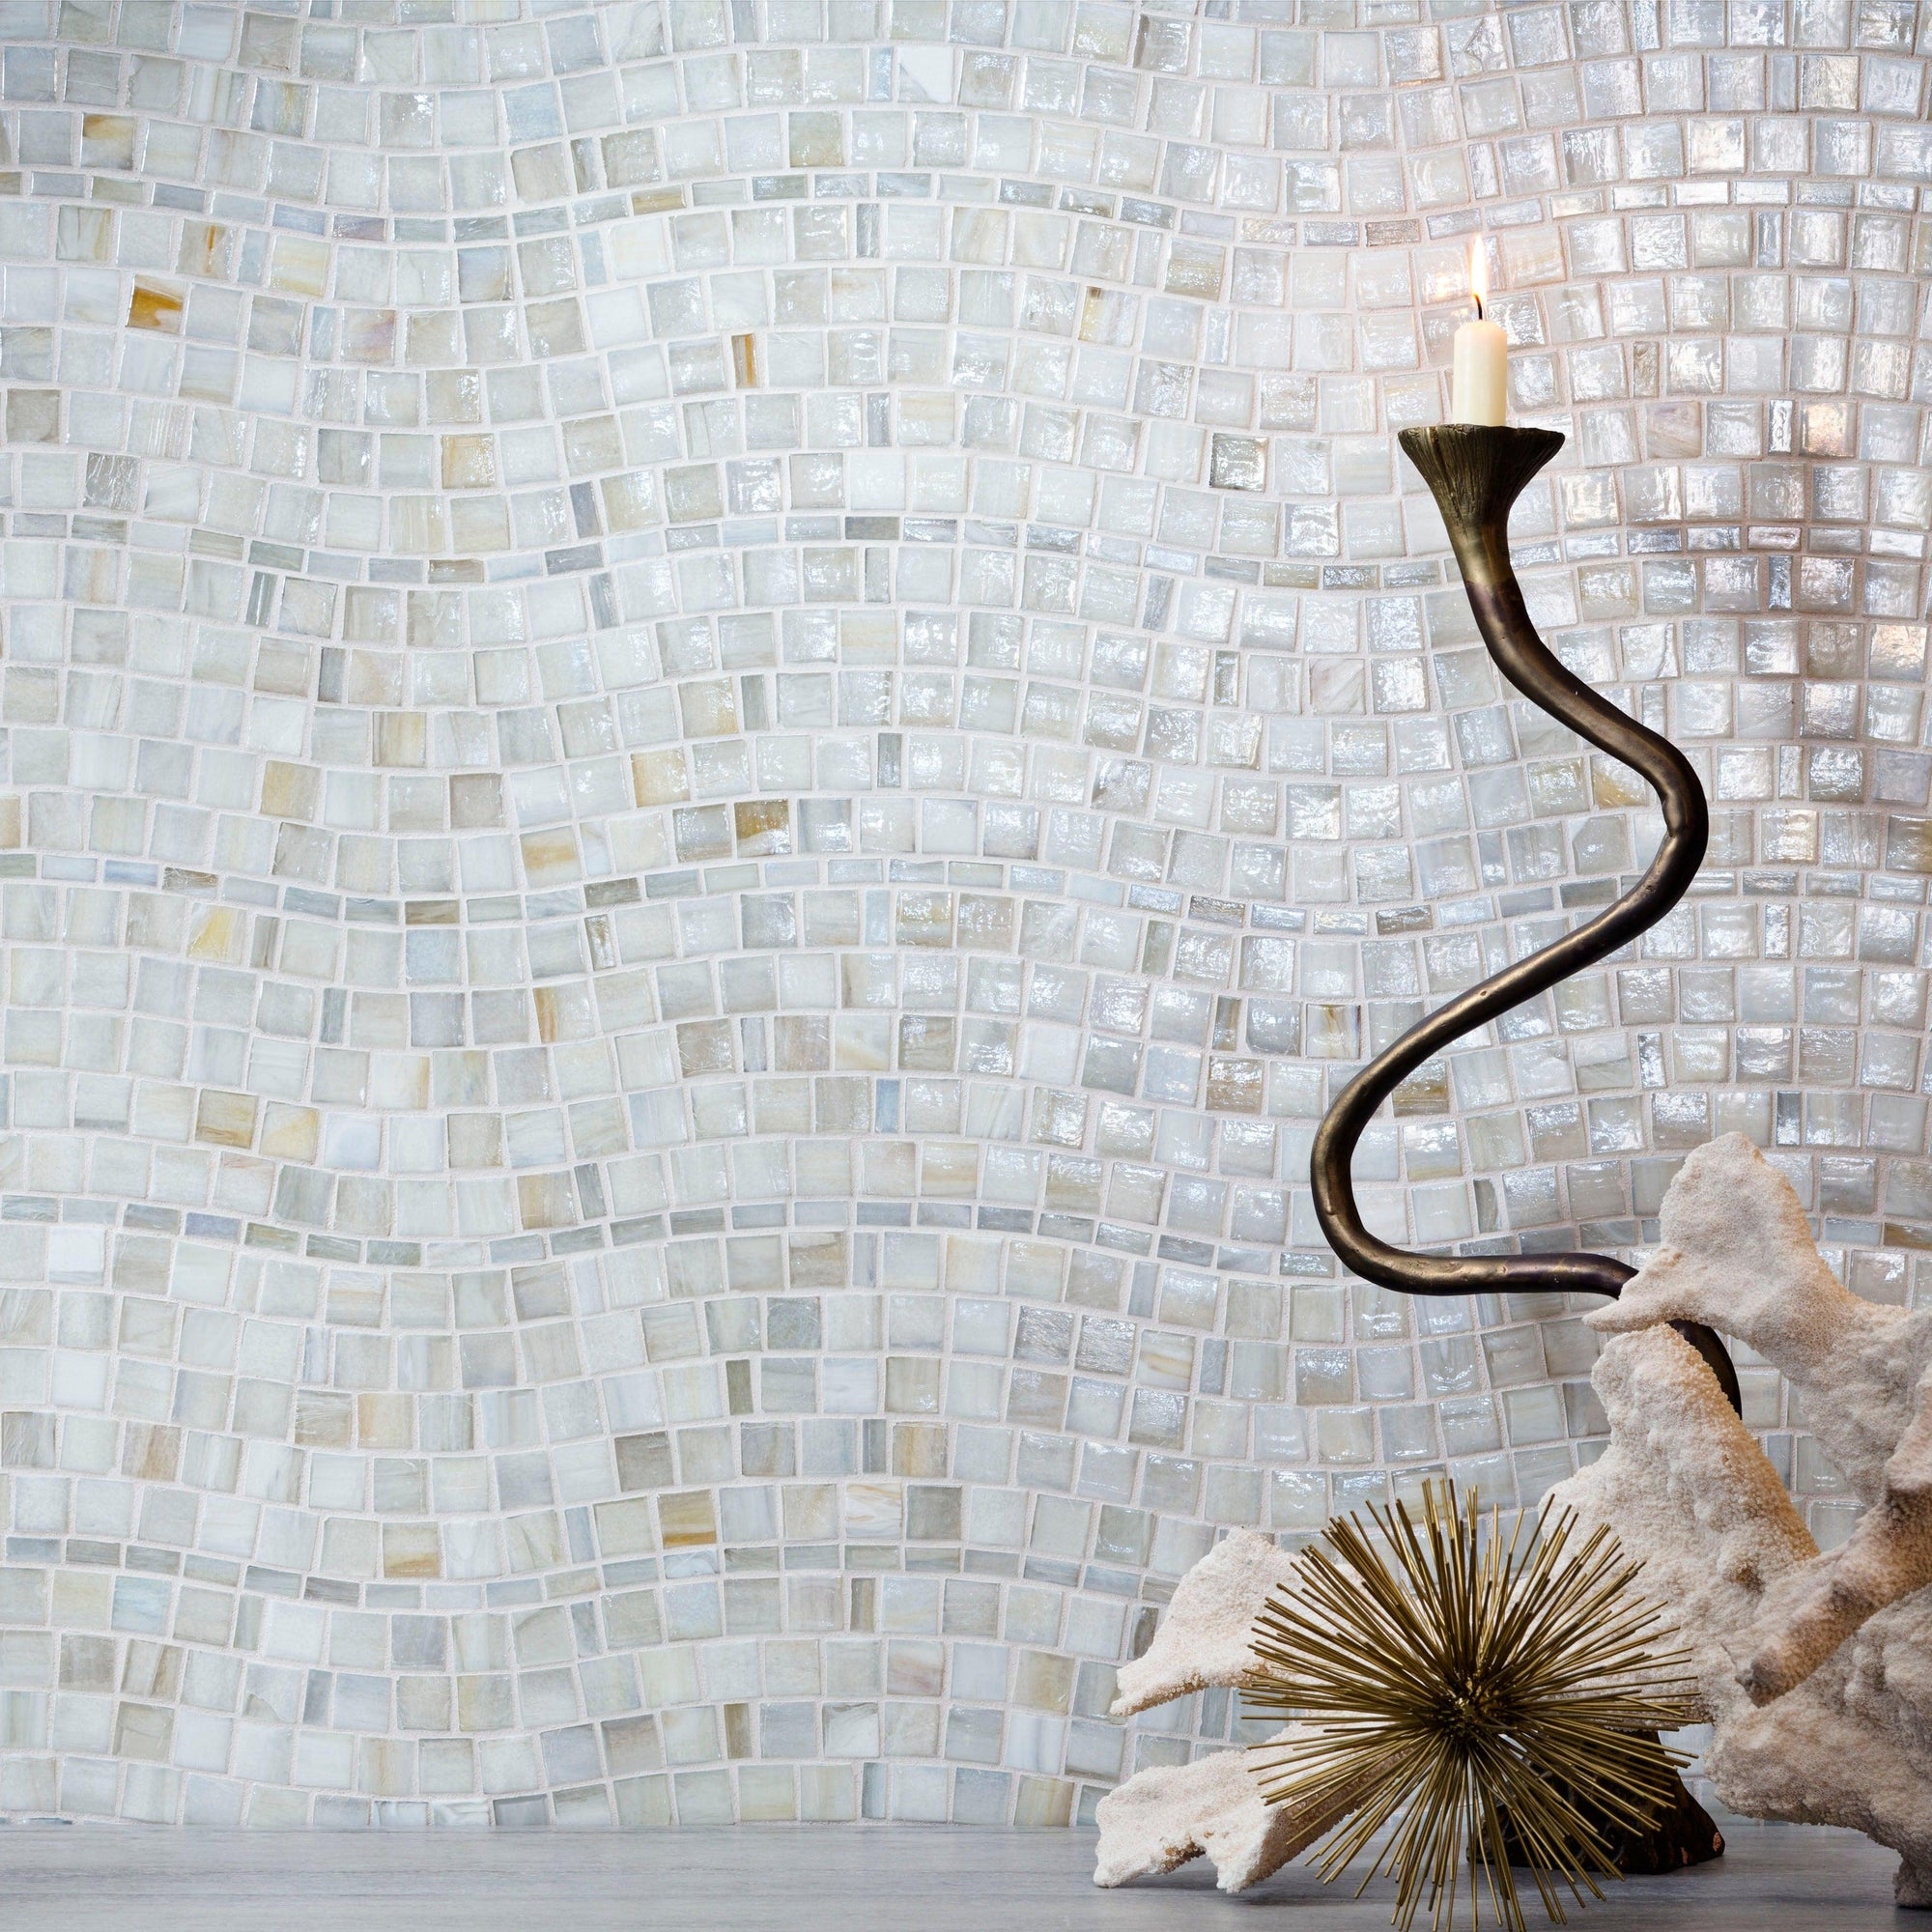 Limestone Mosaic Stone 2x12 Chevron – Artistic Tile